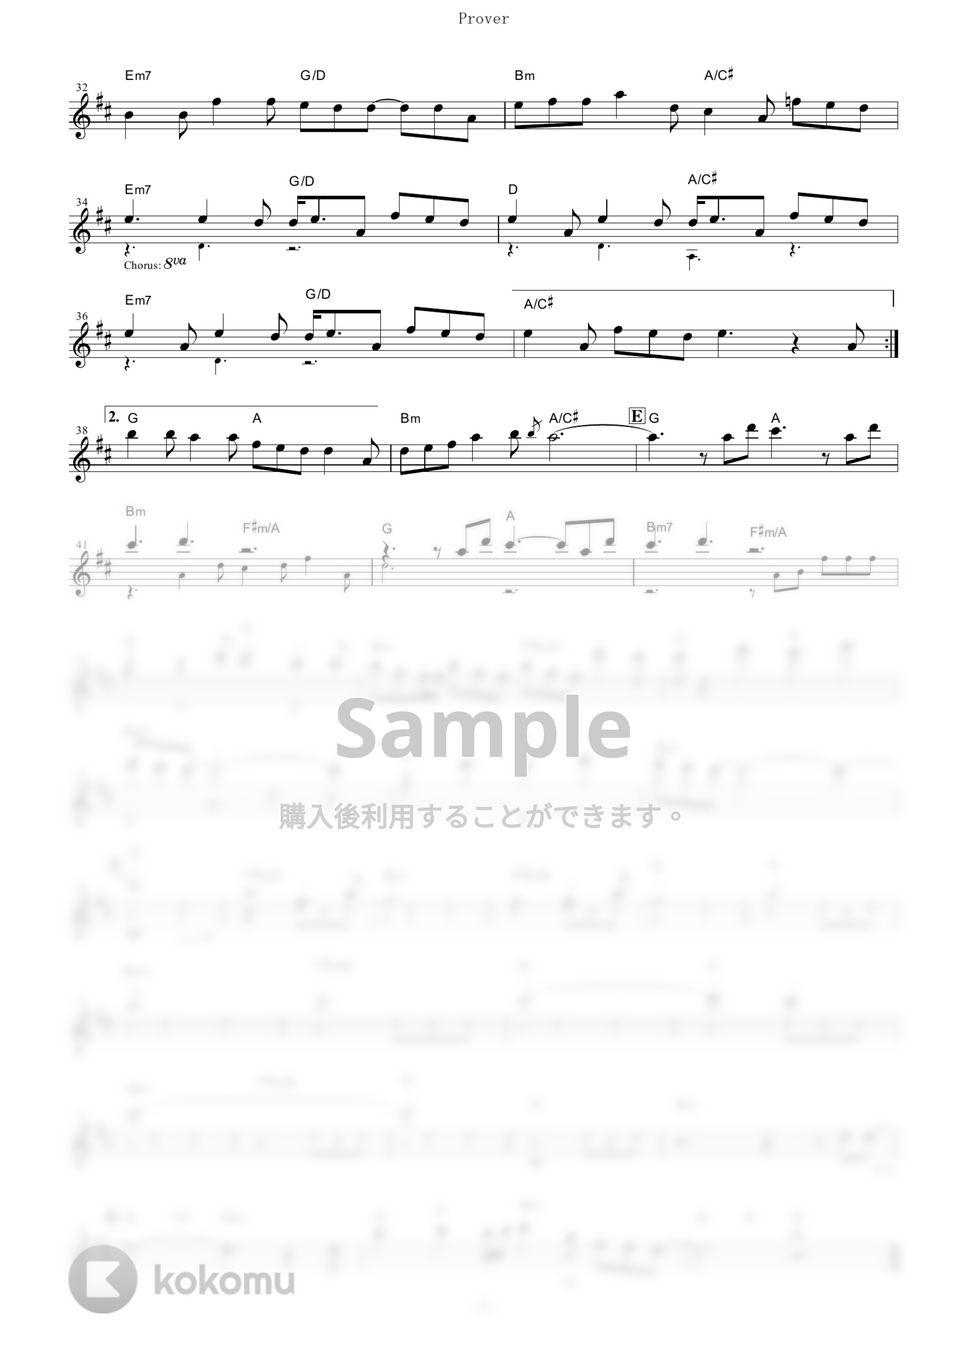 Fate/Grand Order -絶対魔獣戦線バビロニア- - Prover (in Bb) by muta-sax